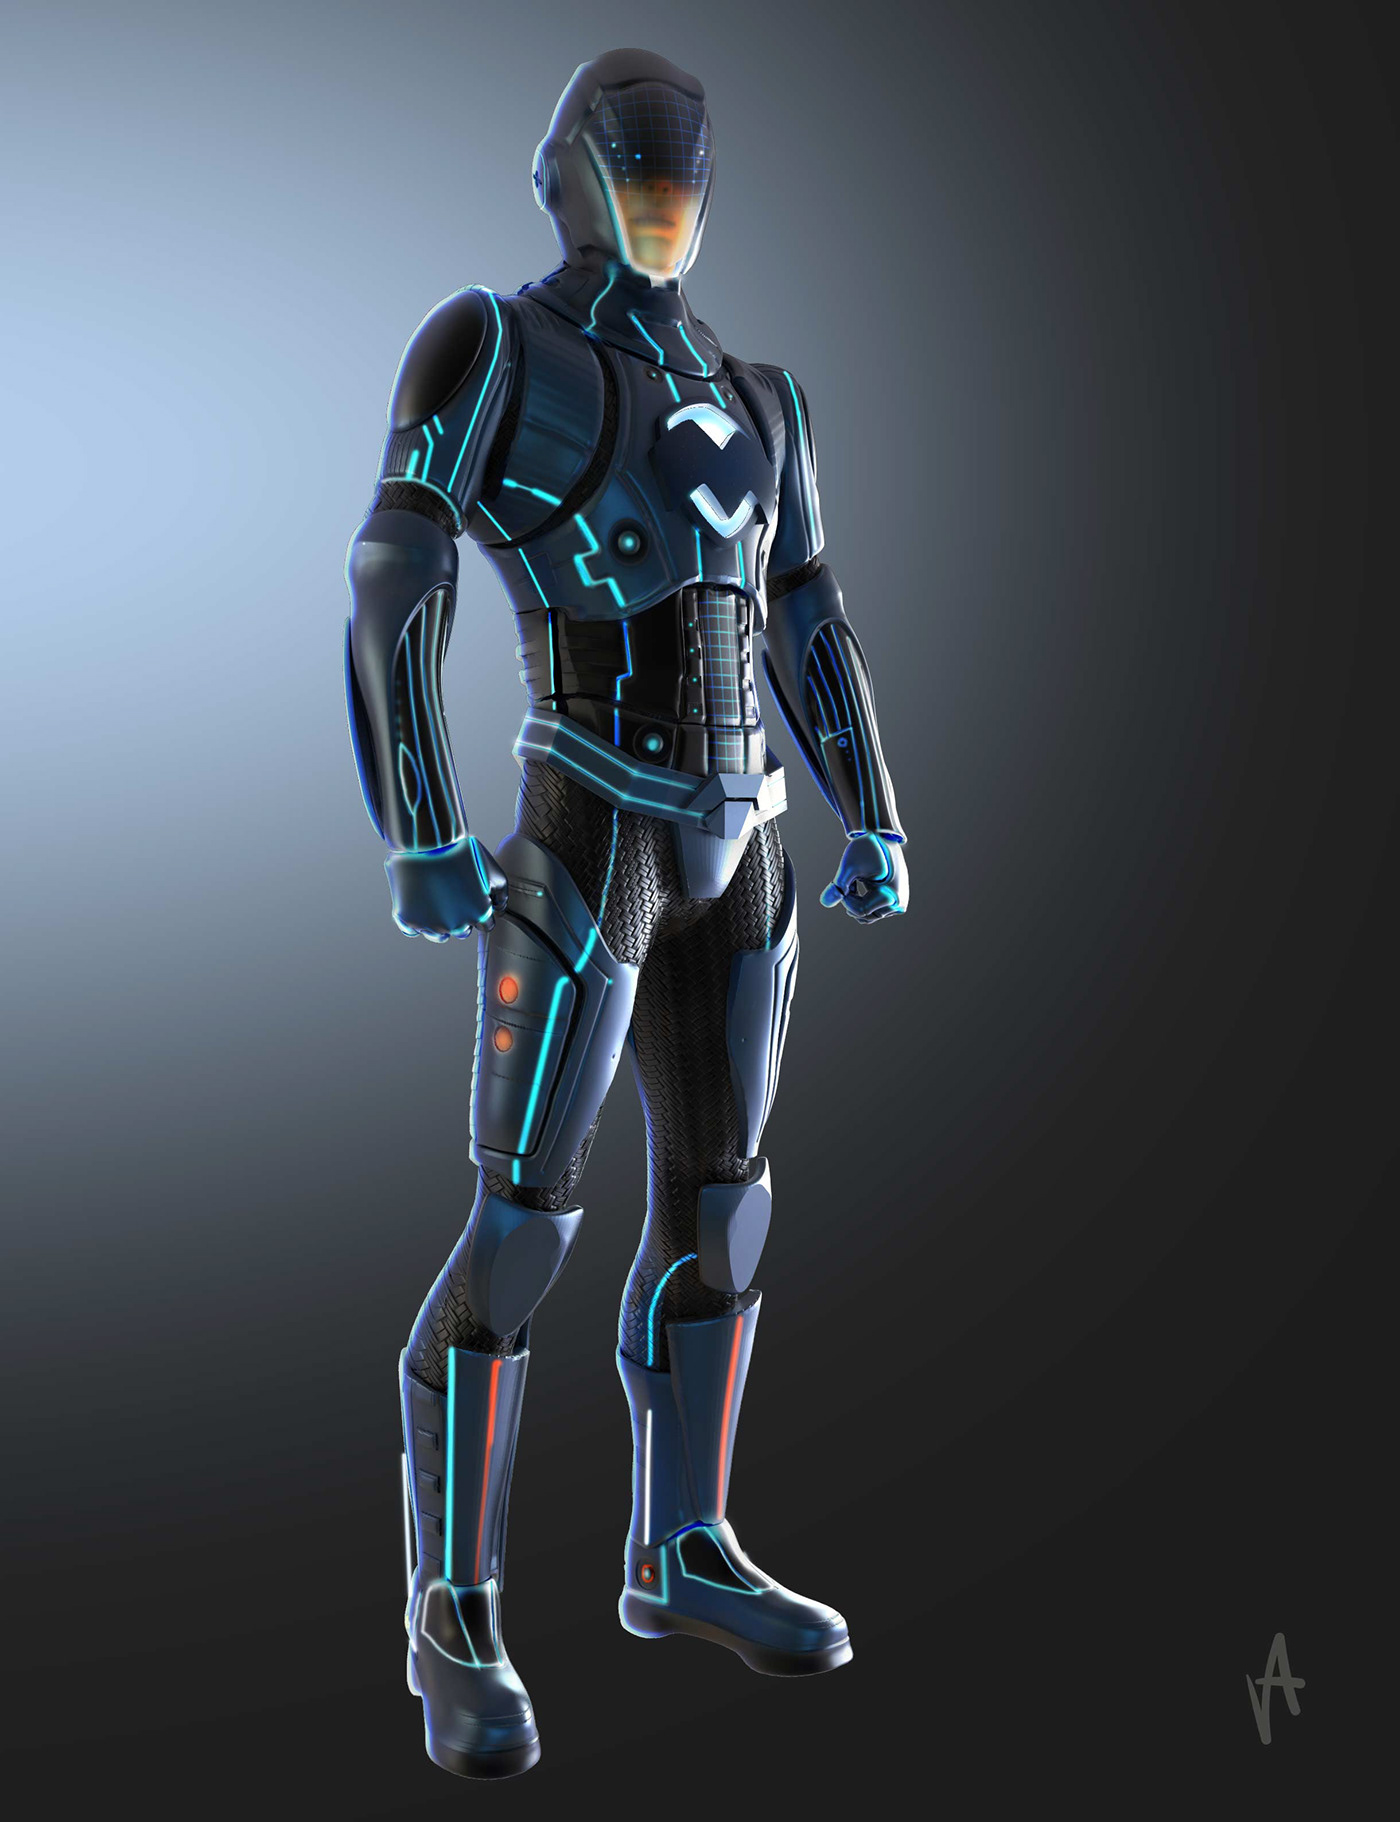 cyberg Aram Vardazaryan Character robbot desigm sculpt 3D movie concept SuperHero marvel iron man